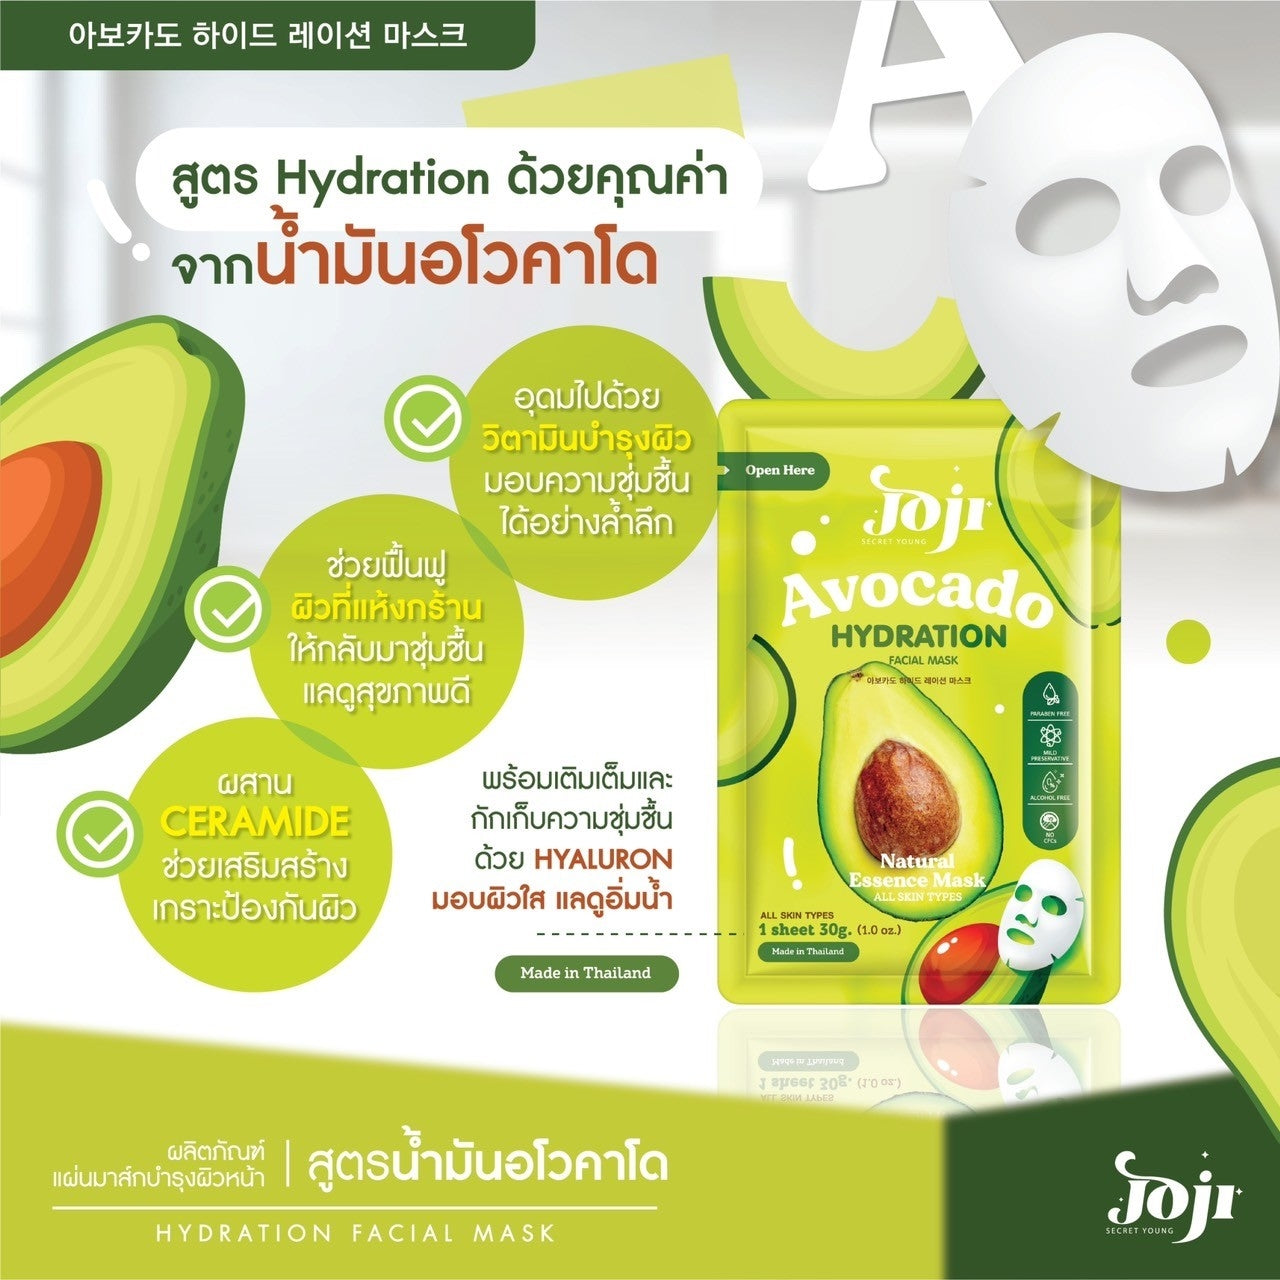 Joji Secret Young 水份面膜 Hydration Mask (牛油果 Avocado) Buy 4 get 1 FREE! Joji